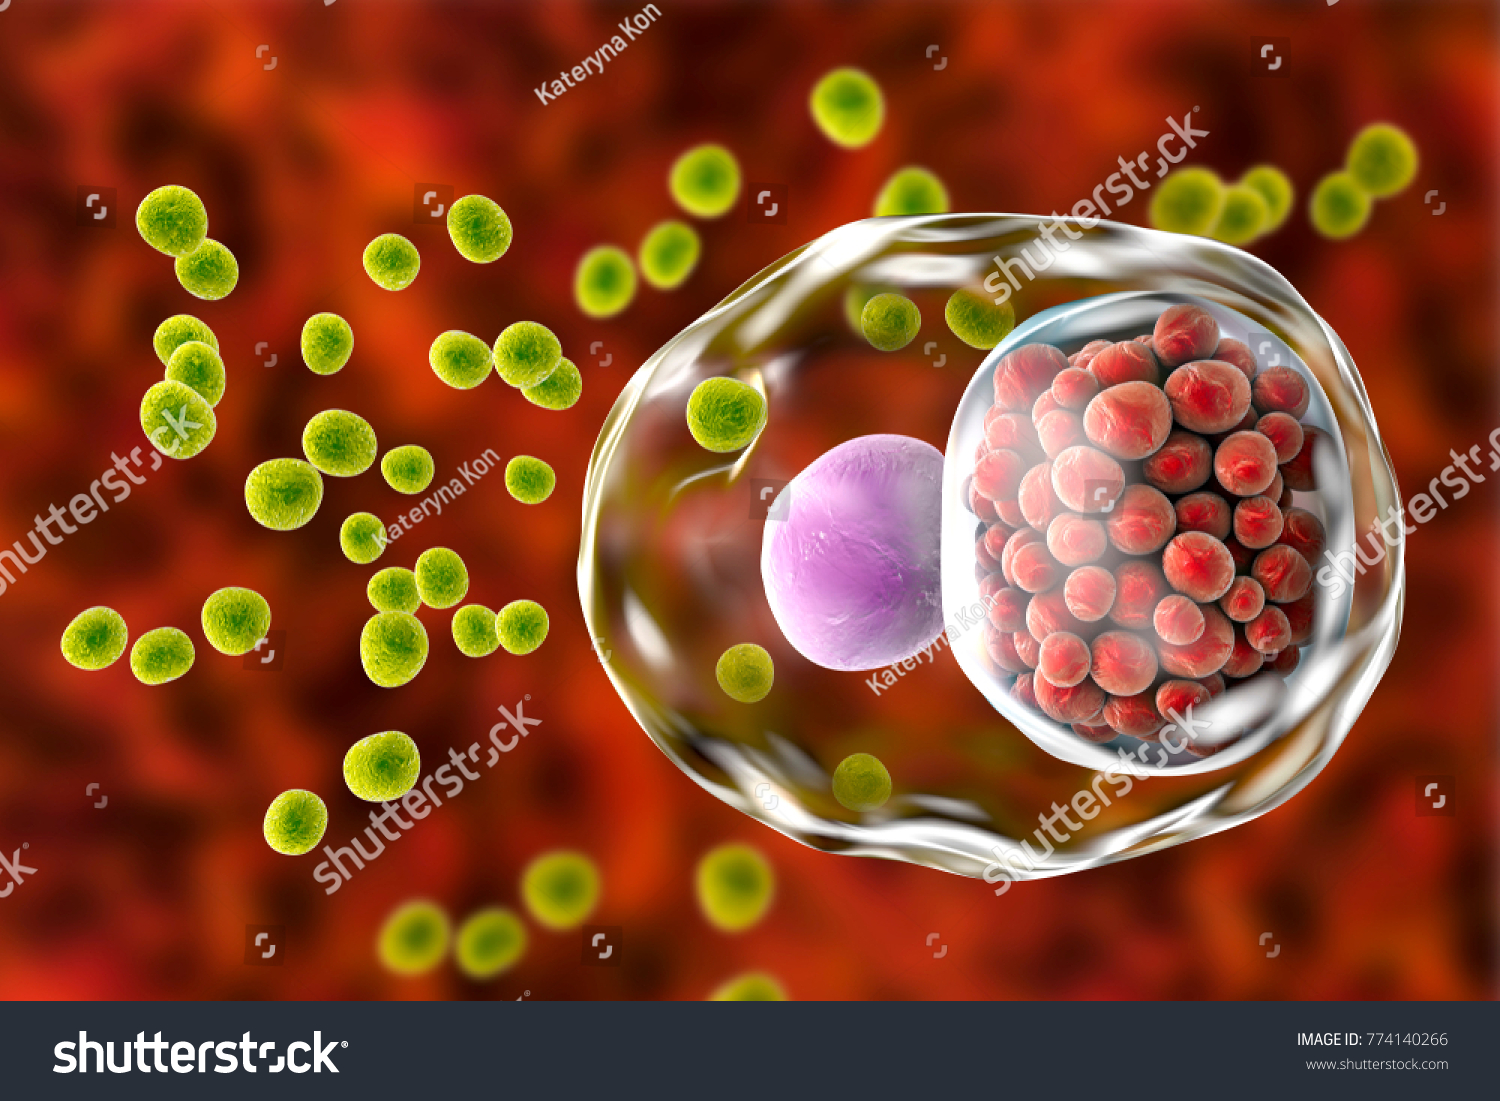 Chlamydia Trachomatis Bacteria 3d Illustration Showing Stock Illustration 774140266 Shutterstock 5988